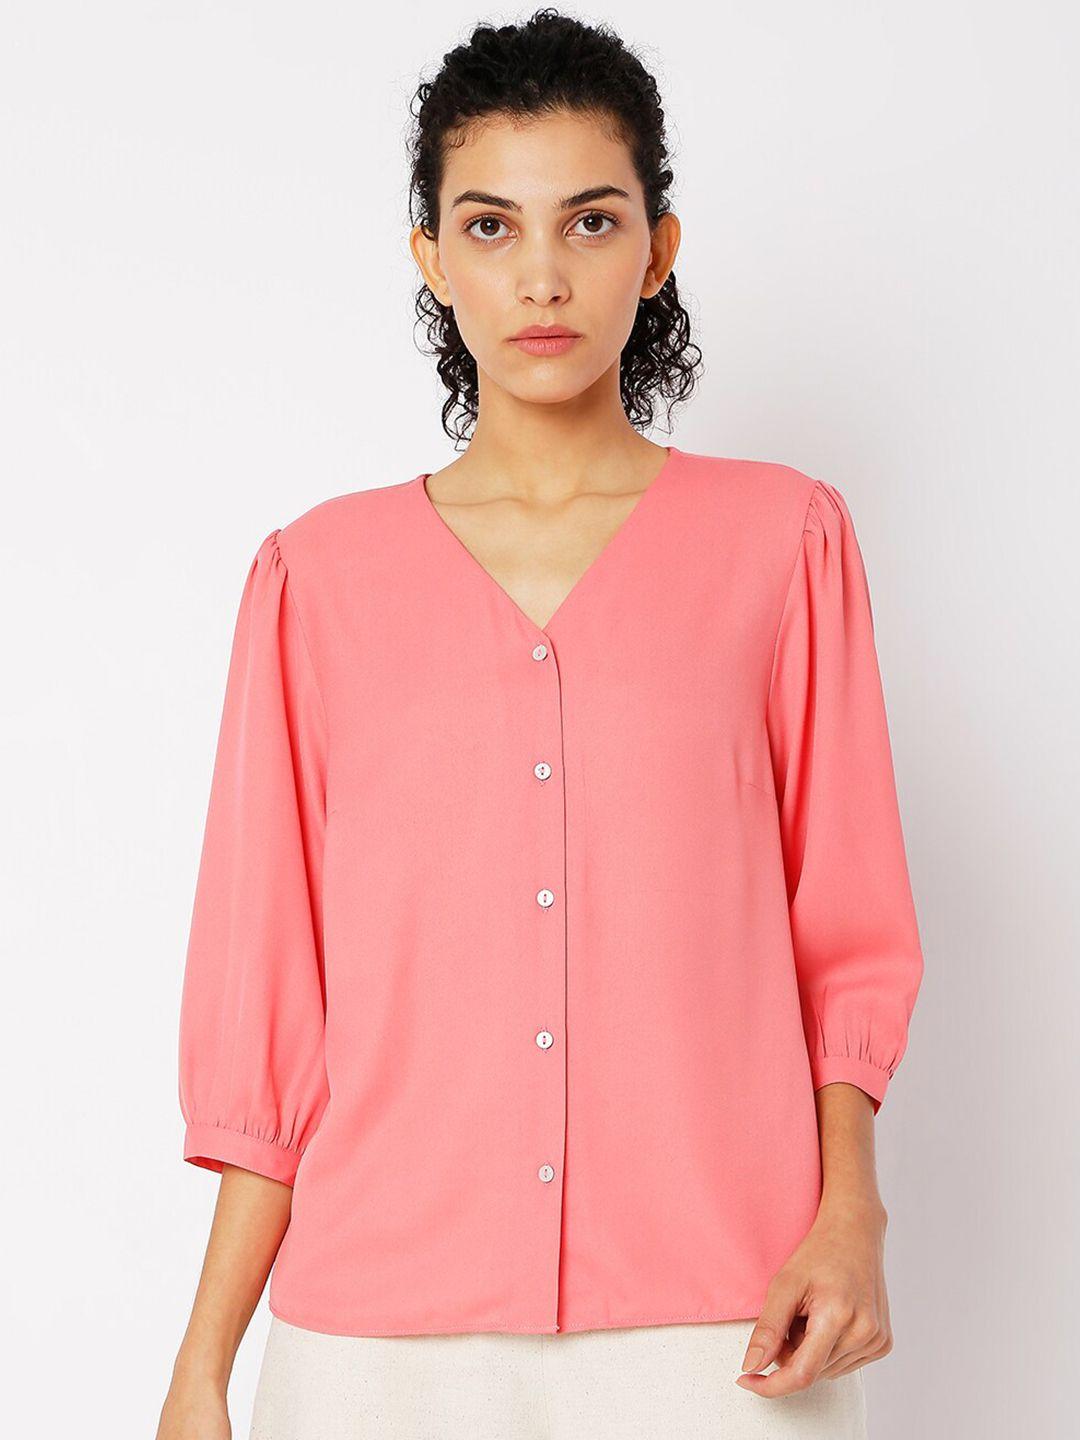 vero moda pink shirt style top